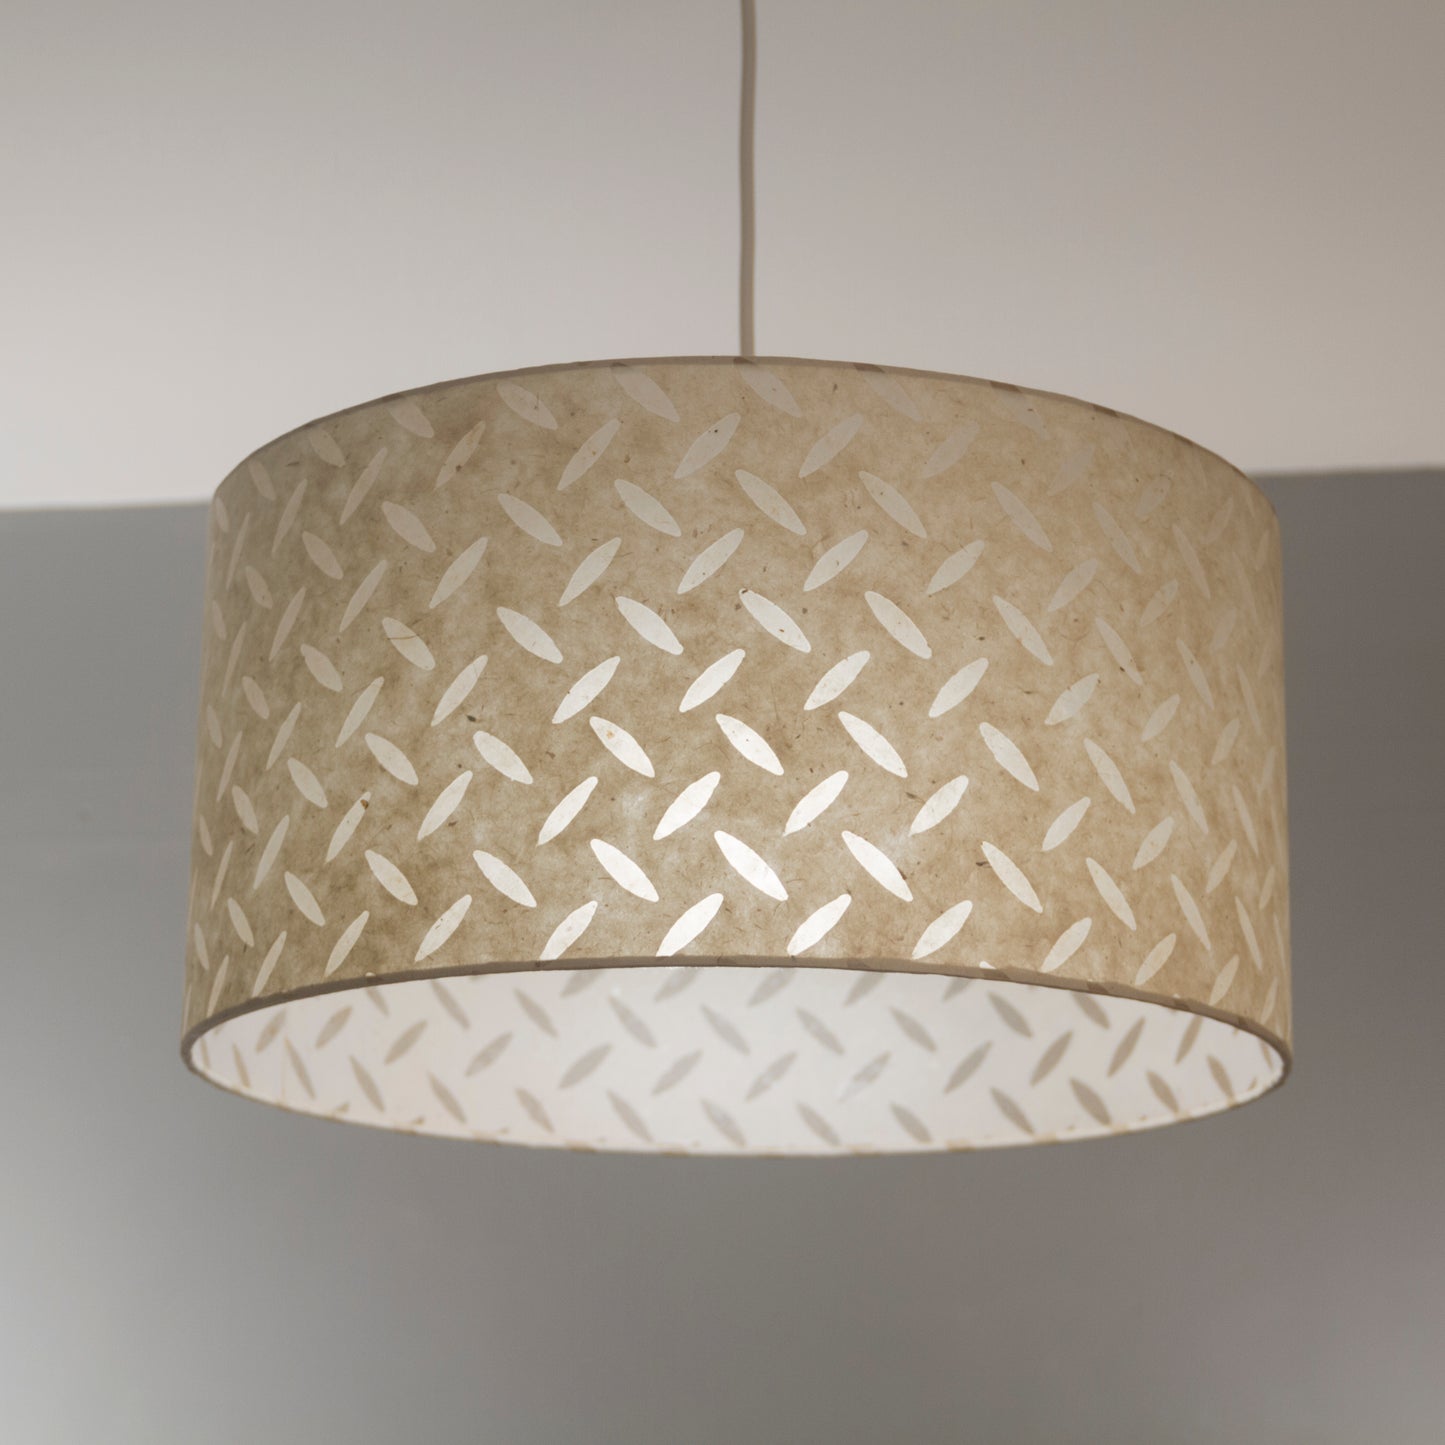 Oval Lamp Shade - P10 - Batik Tread Plate Natural, 20cm(w) x 20cm(h) x 13cm(d)